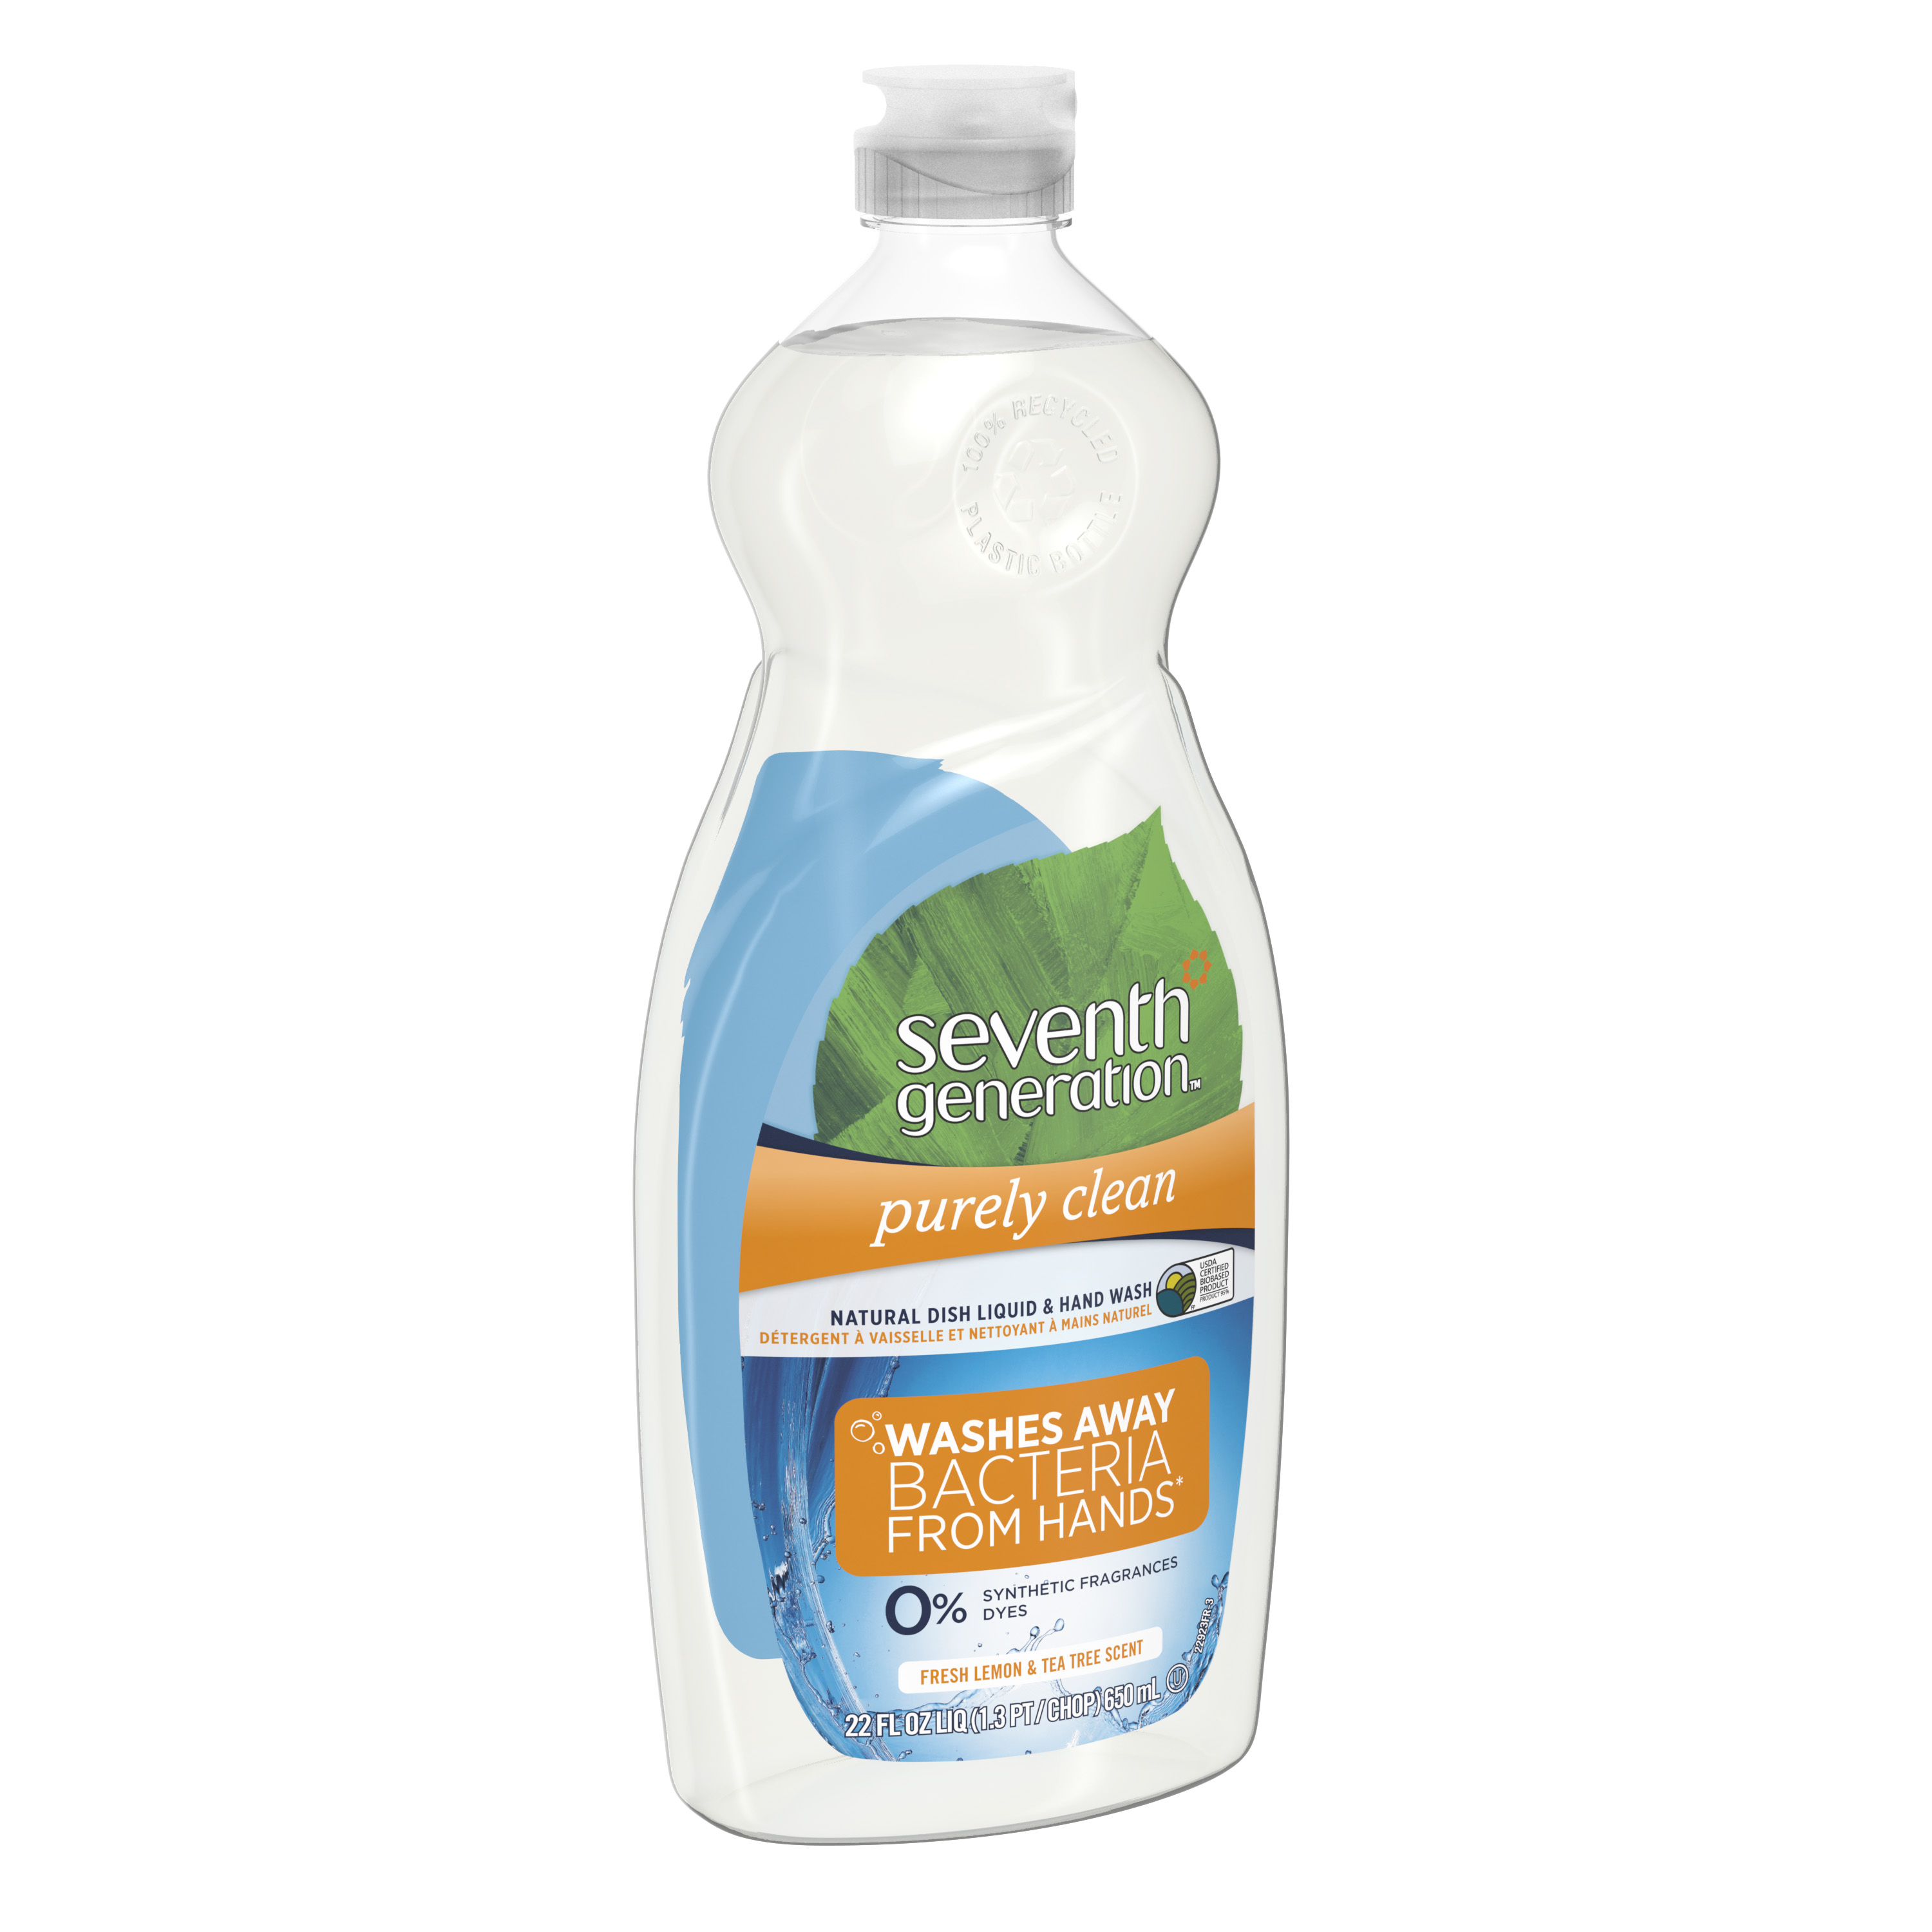 Seventh Generation Purely Clean Liquid Dish Soap, Fresh Lemon & Tea Tree scent, 22 oz - image 3 of 9